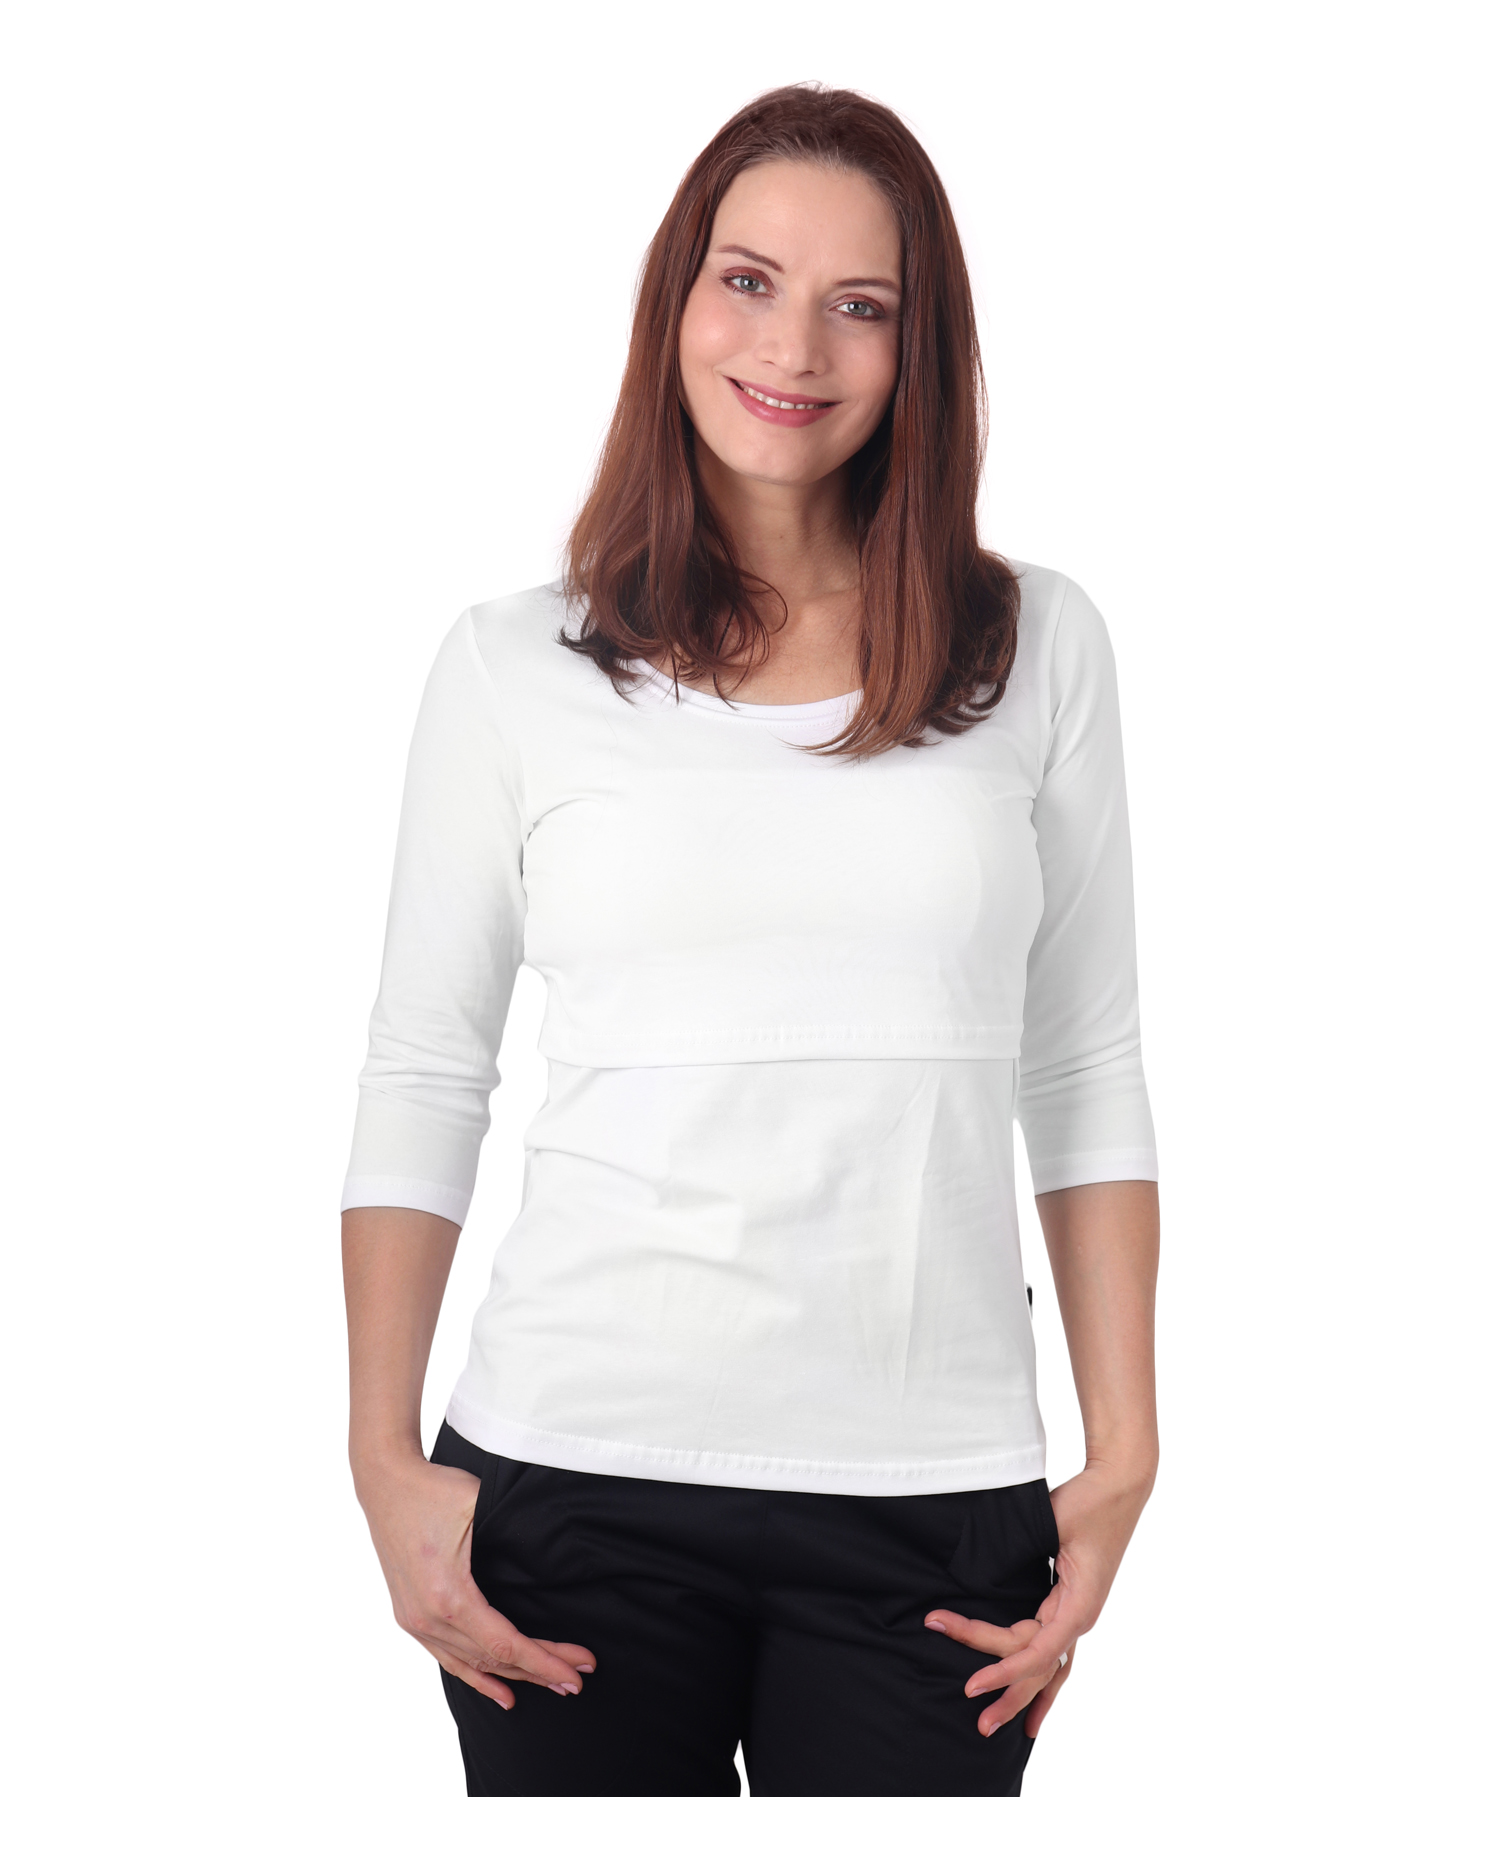 Breast-feeding T-shirt 01 Katerina, 3/4 sleeves, WHITE